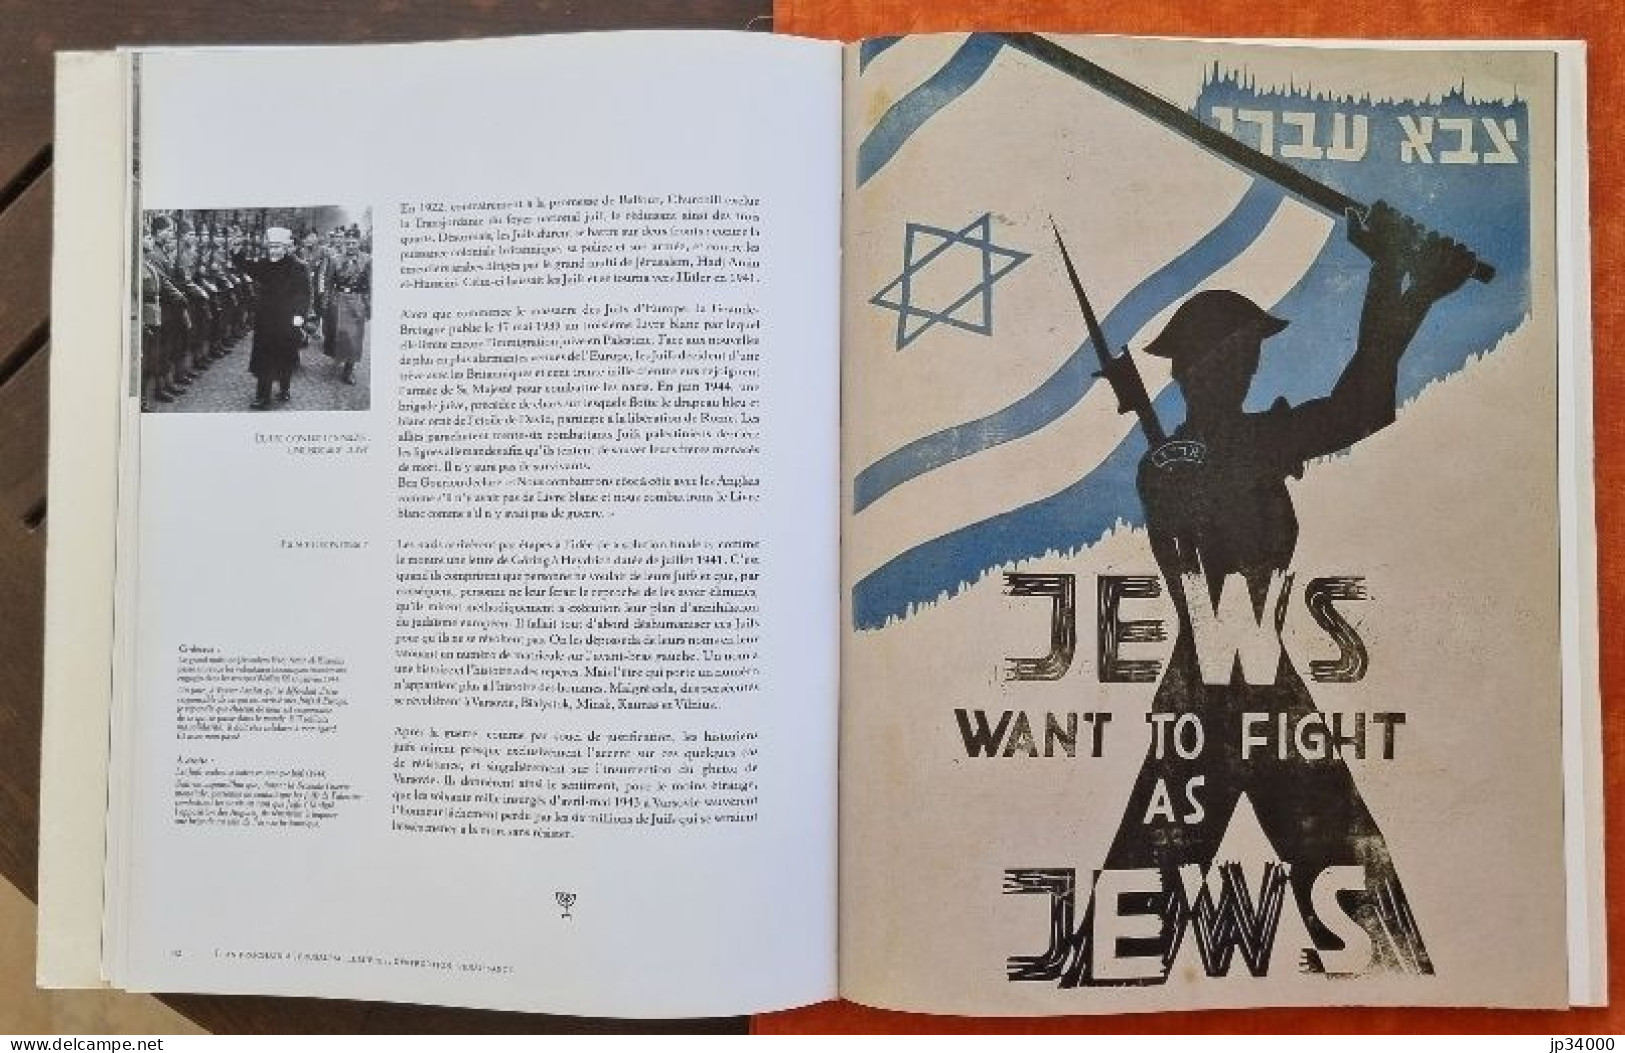 Histoires du peuple juif par Marek HALTER (éd Arthaud en 2010)